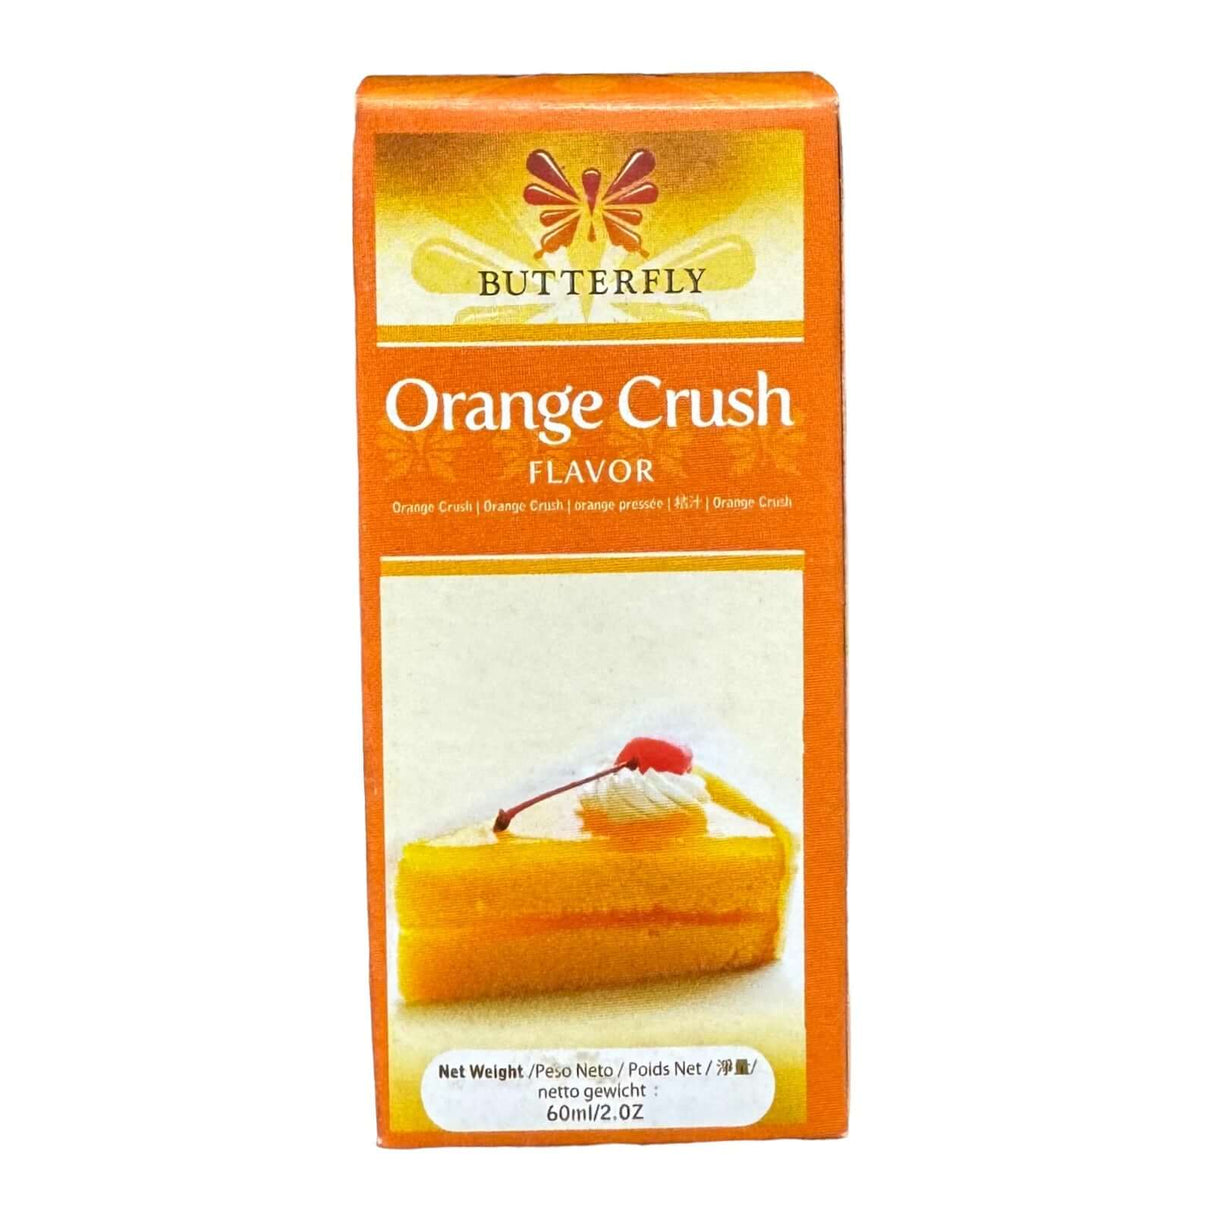 Butterfly Orange Crush Flavor